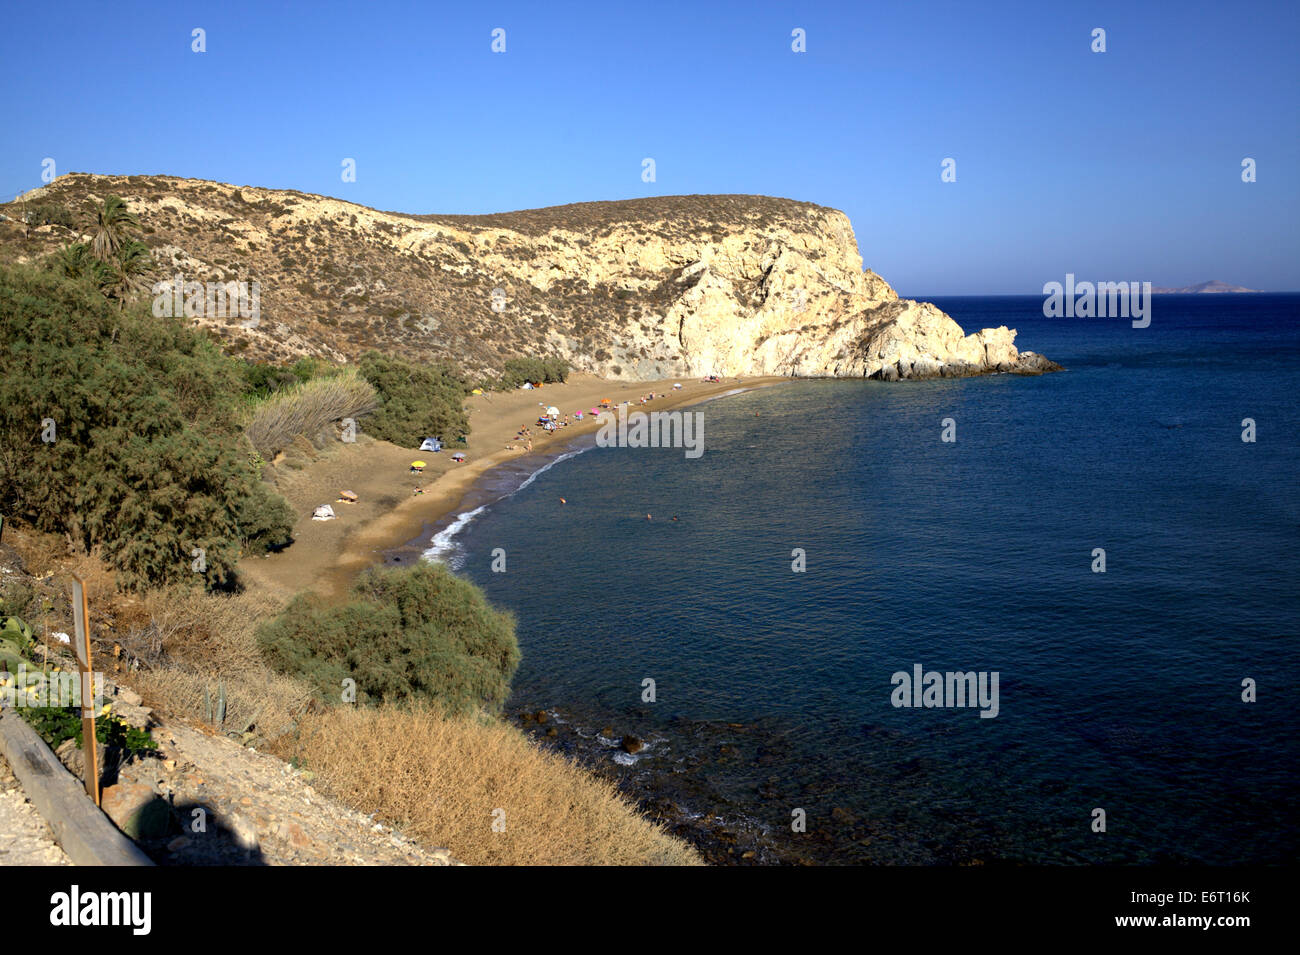 The Kleisidi beach. Anafi, Cyclades, Greece. Stock Photo